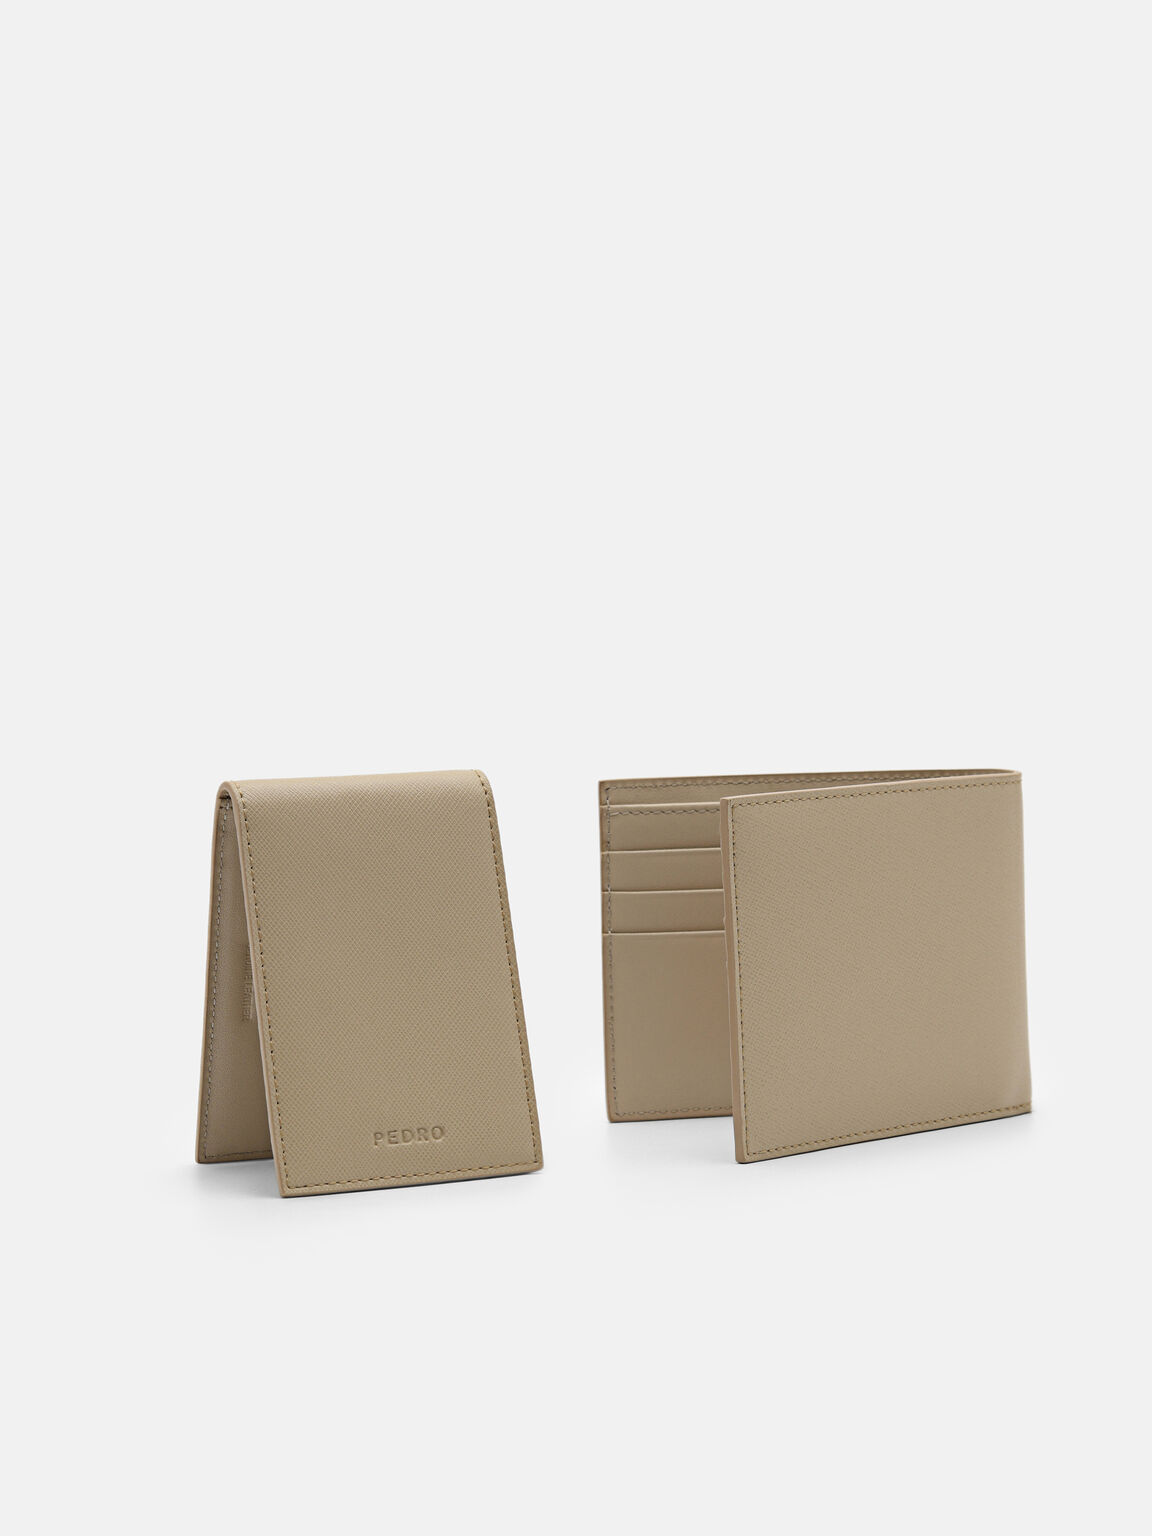 Leather Bi-Fold Insert Wallet, Taupe, hi-res